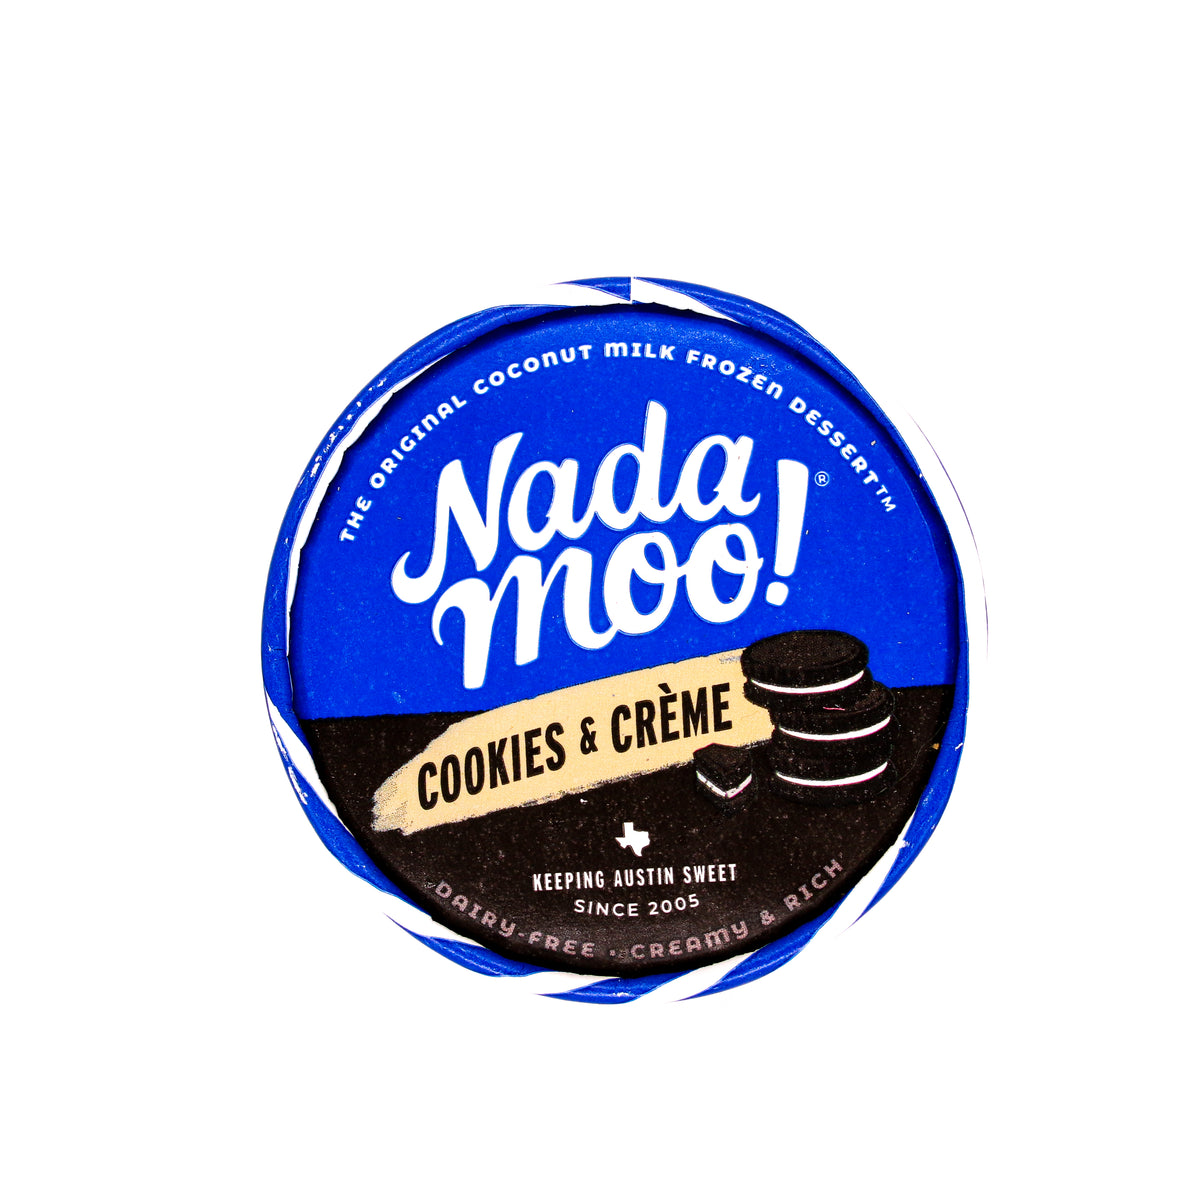 Nada Moo Cookies and Cream